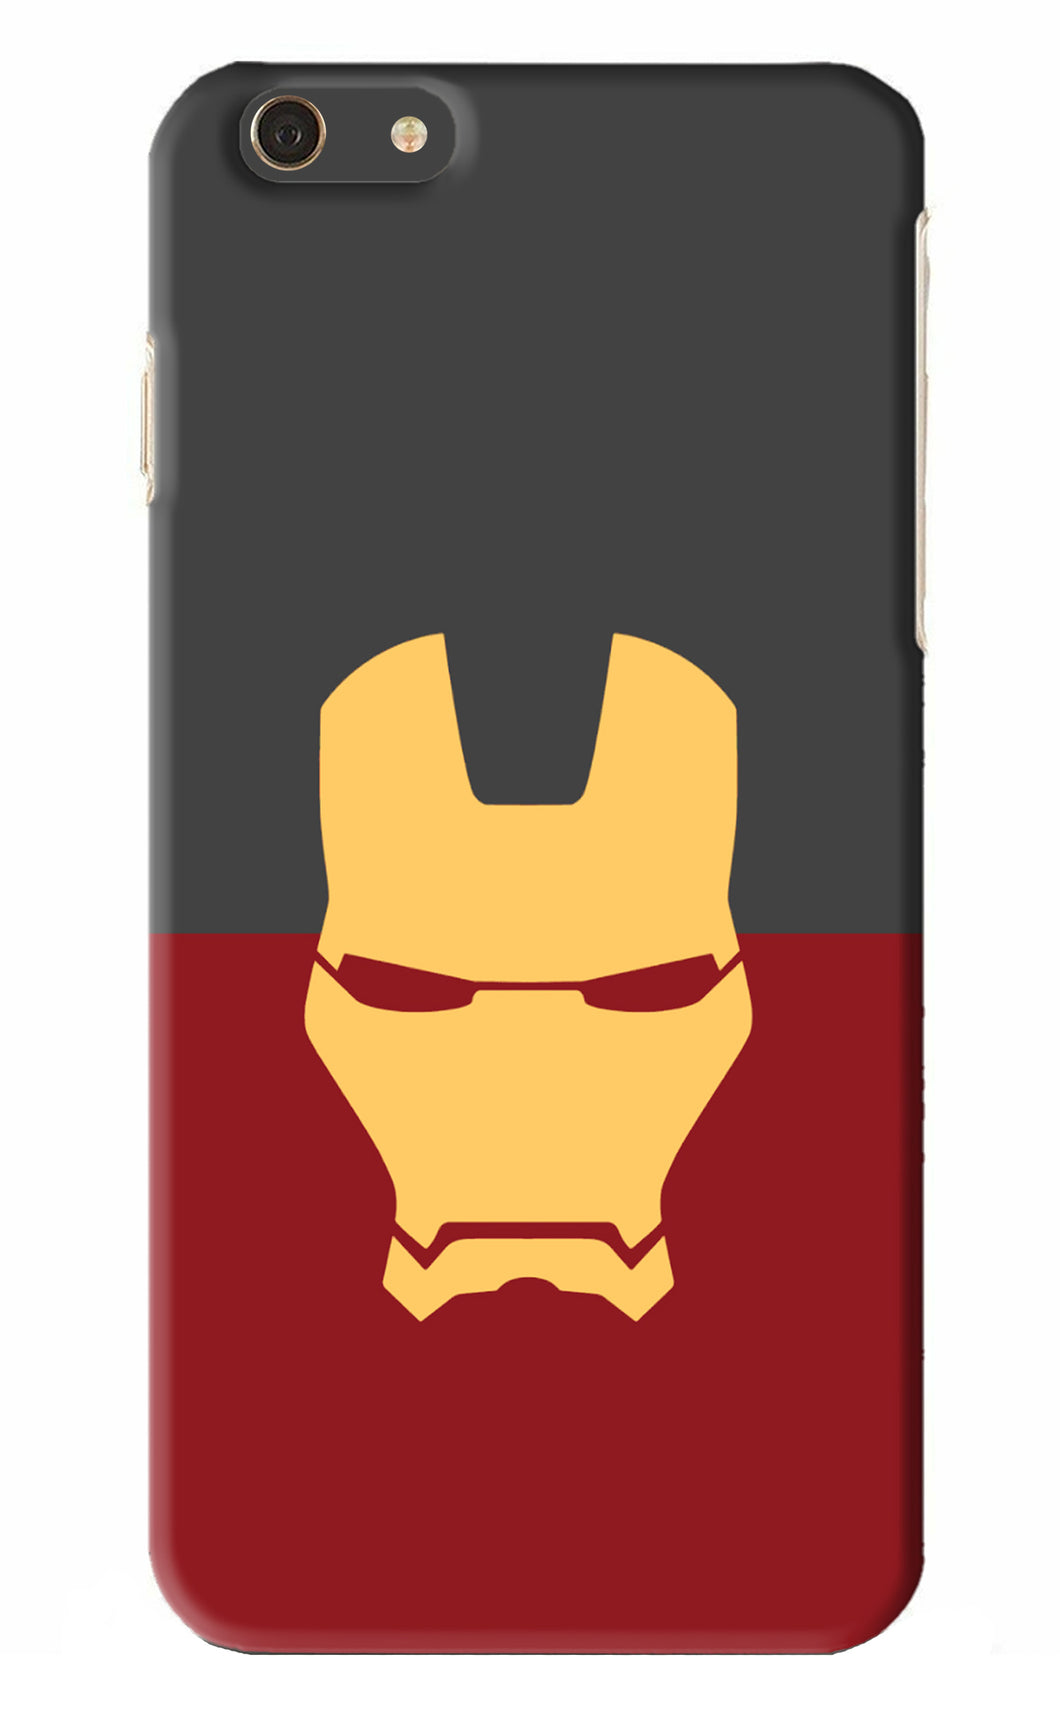 Ironman iPhone 6S Plus Back Skin Wrap